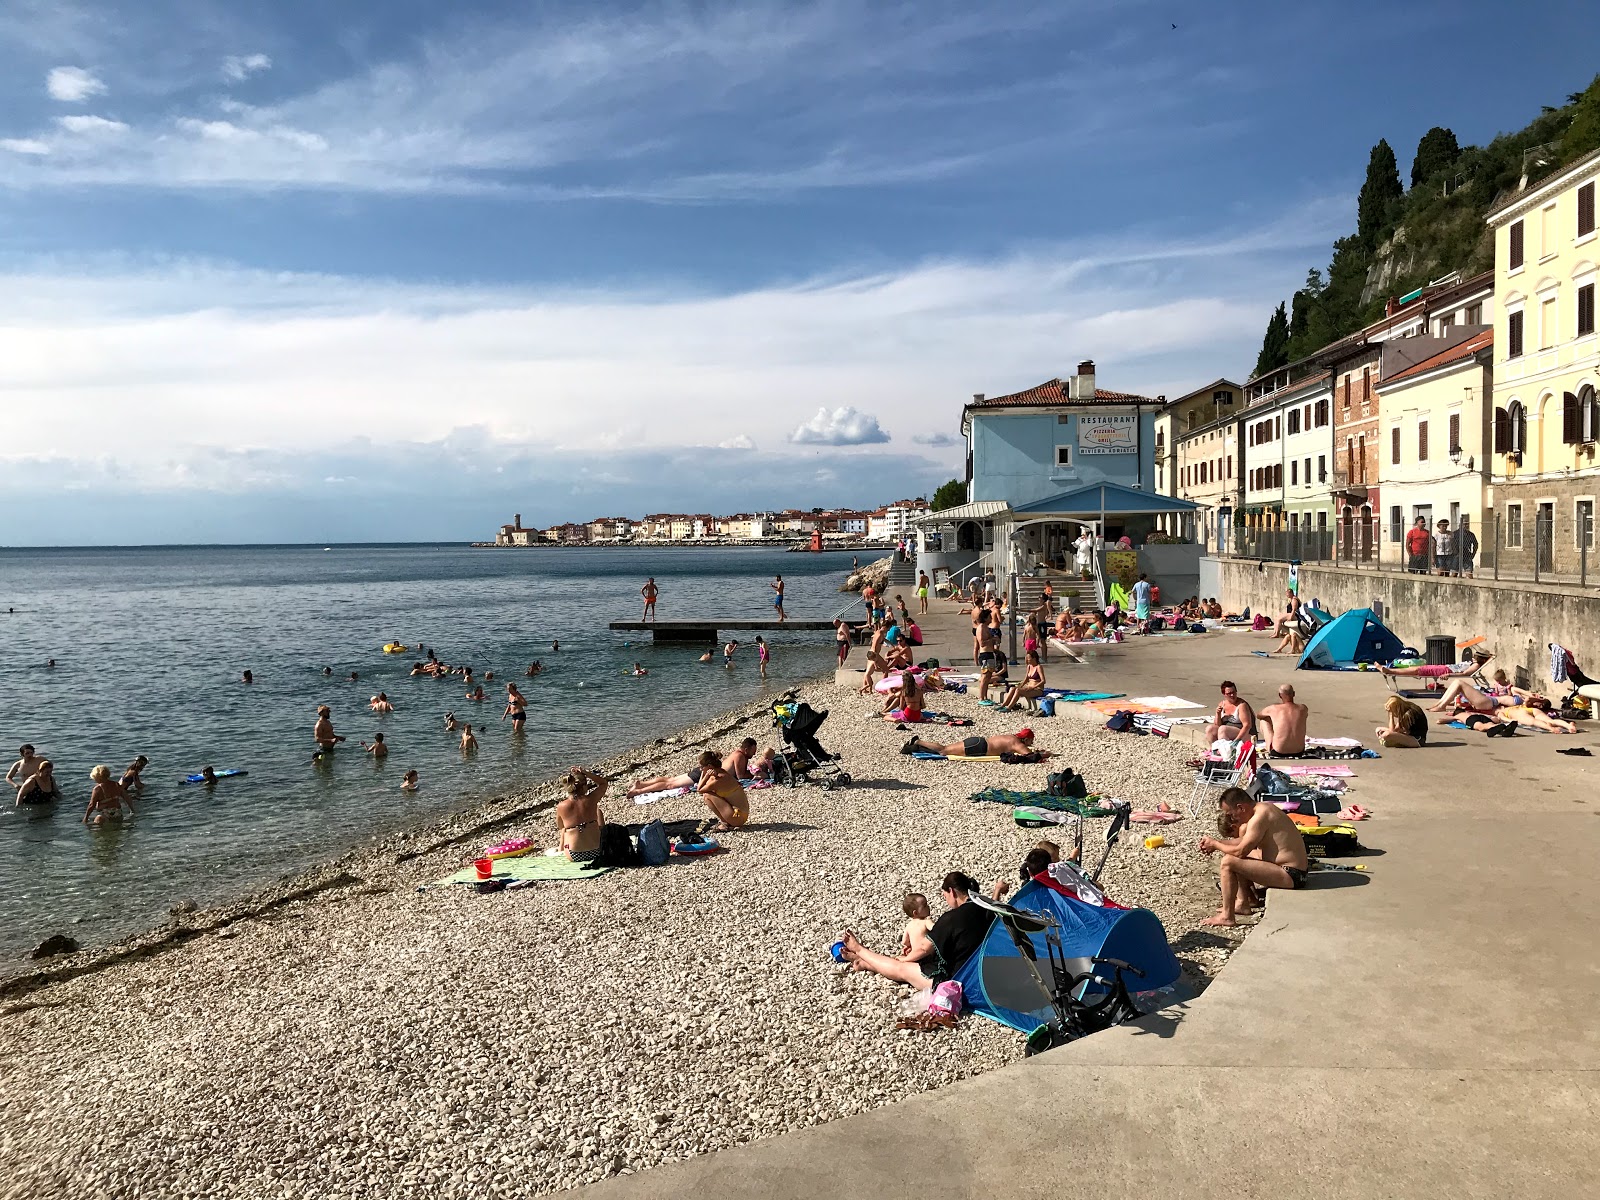 Foto de Fornace beach - lugar popular entre os apreciadores de relaxamento